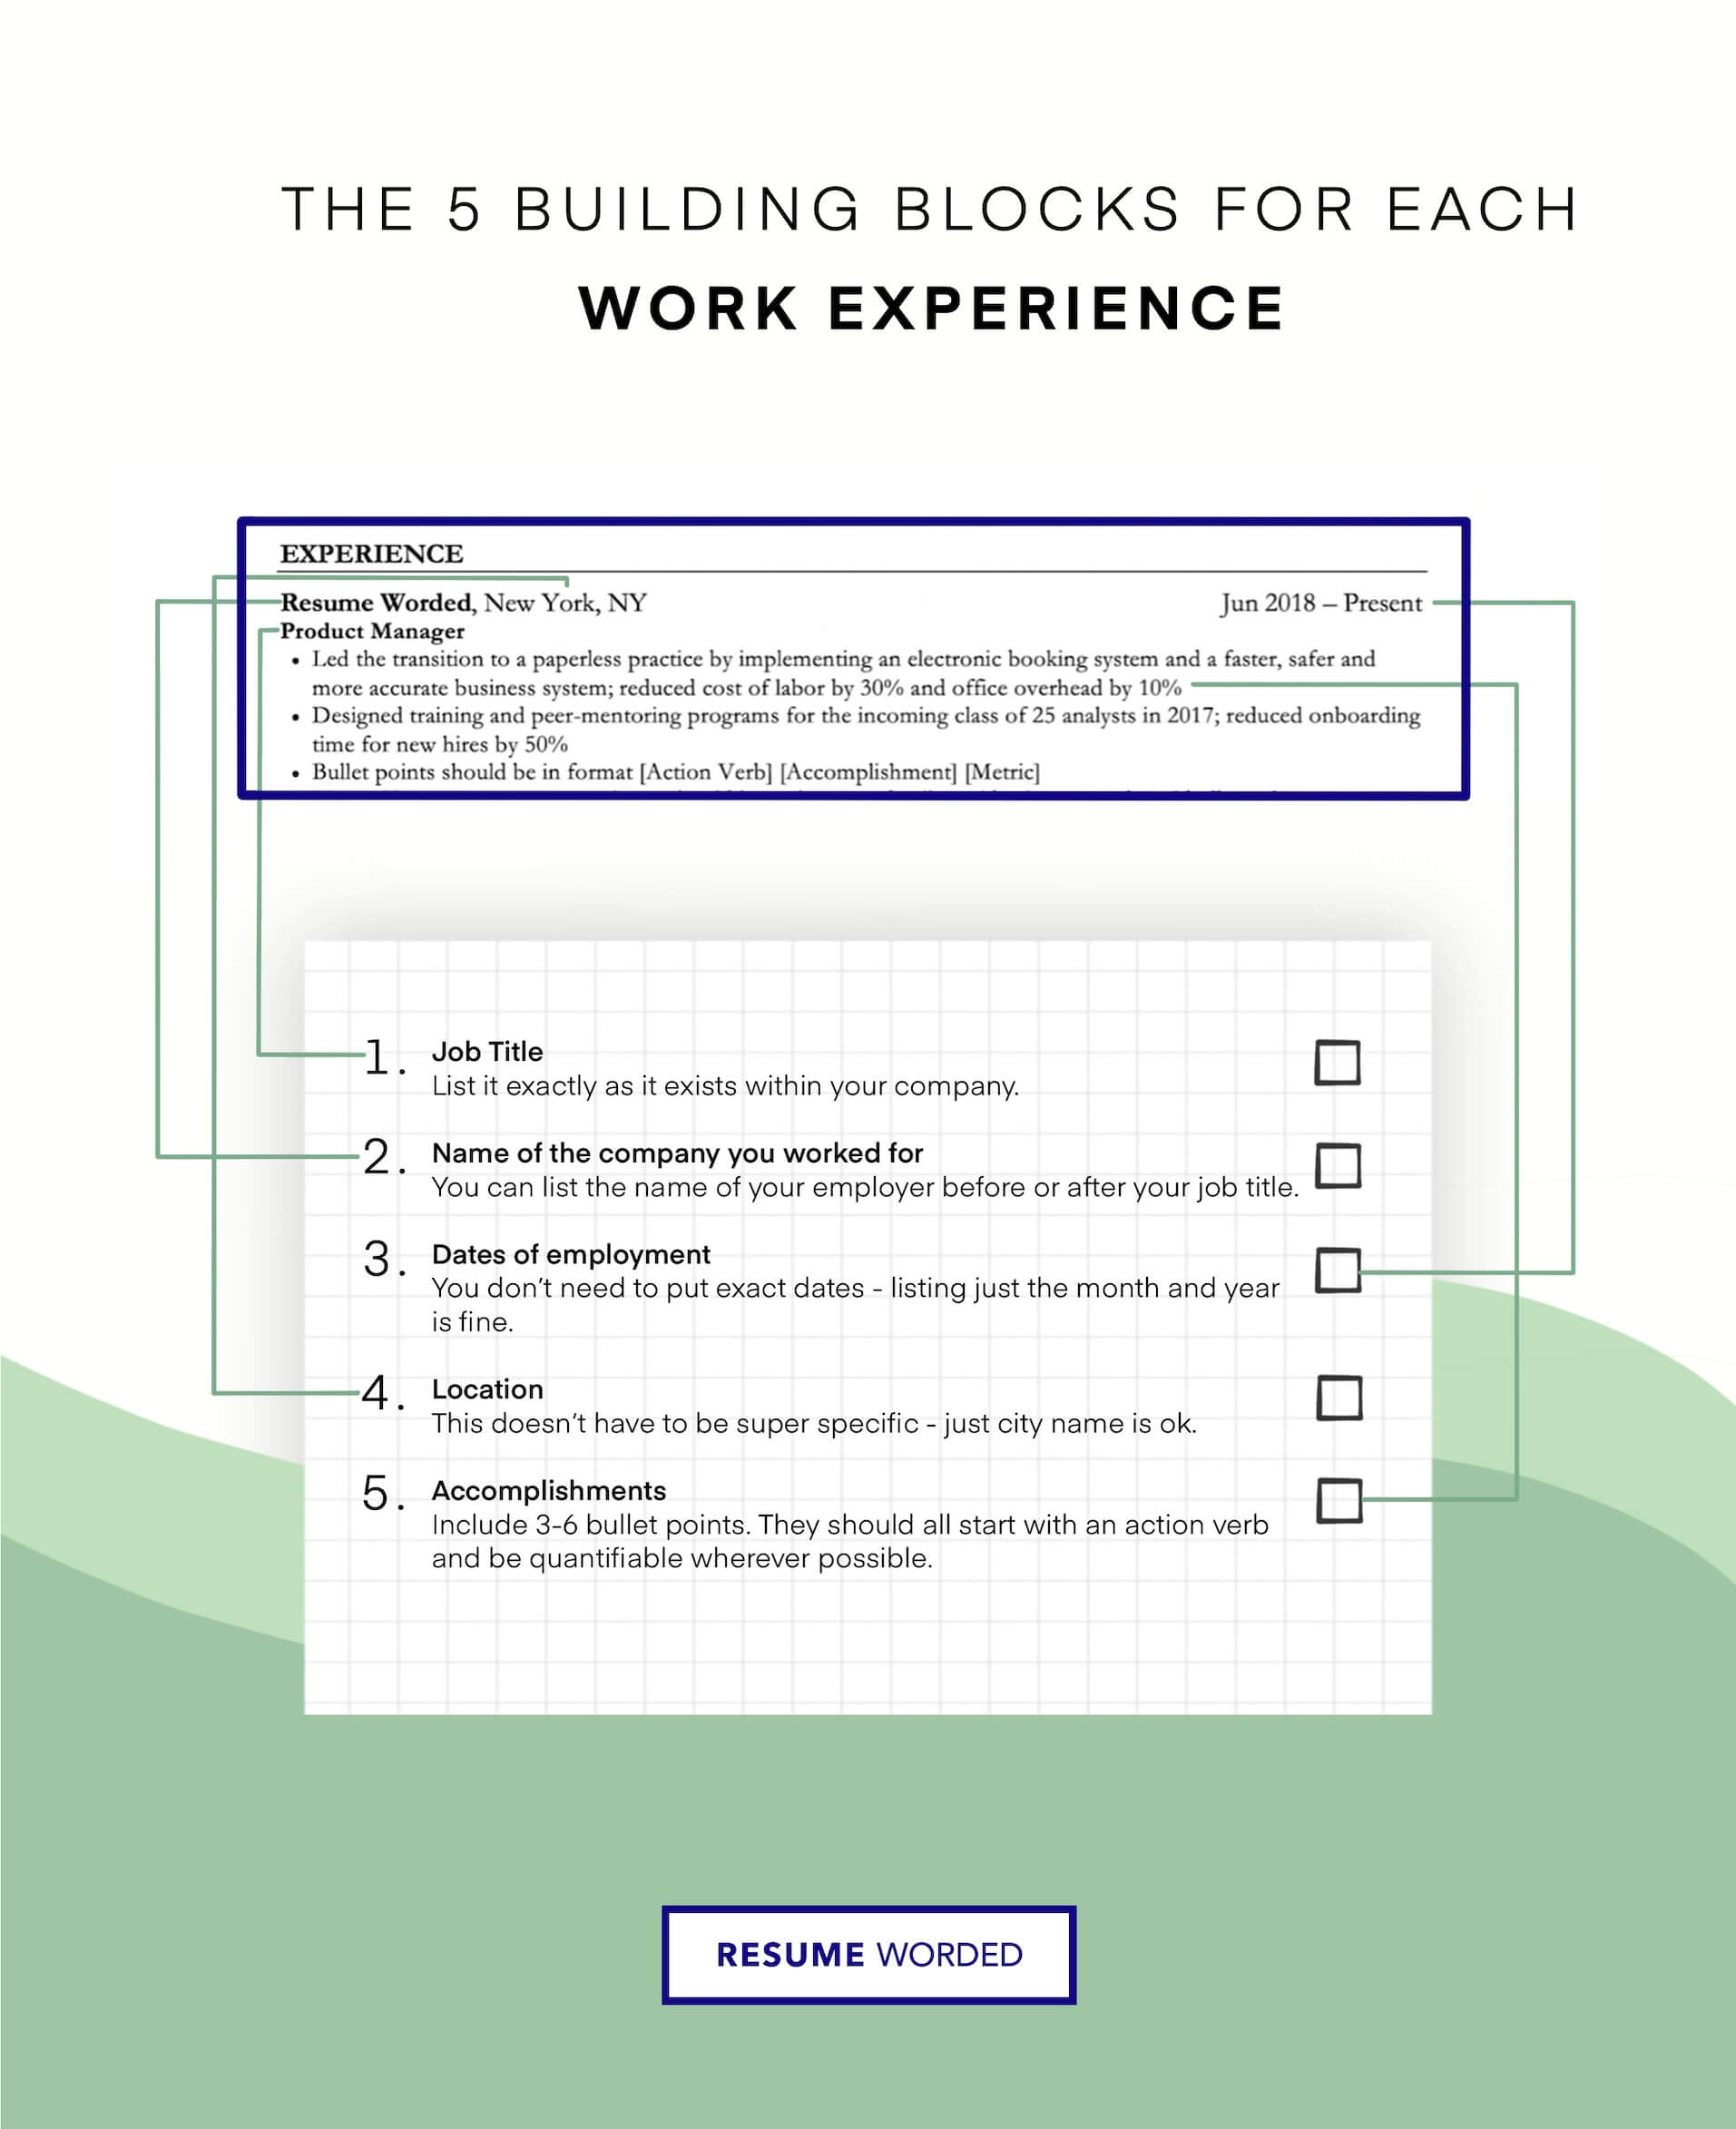 Showcase your leadership experience - Customer Service Supervisor CV